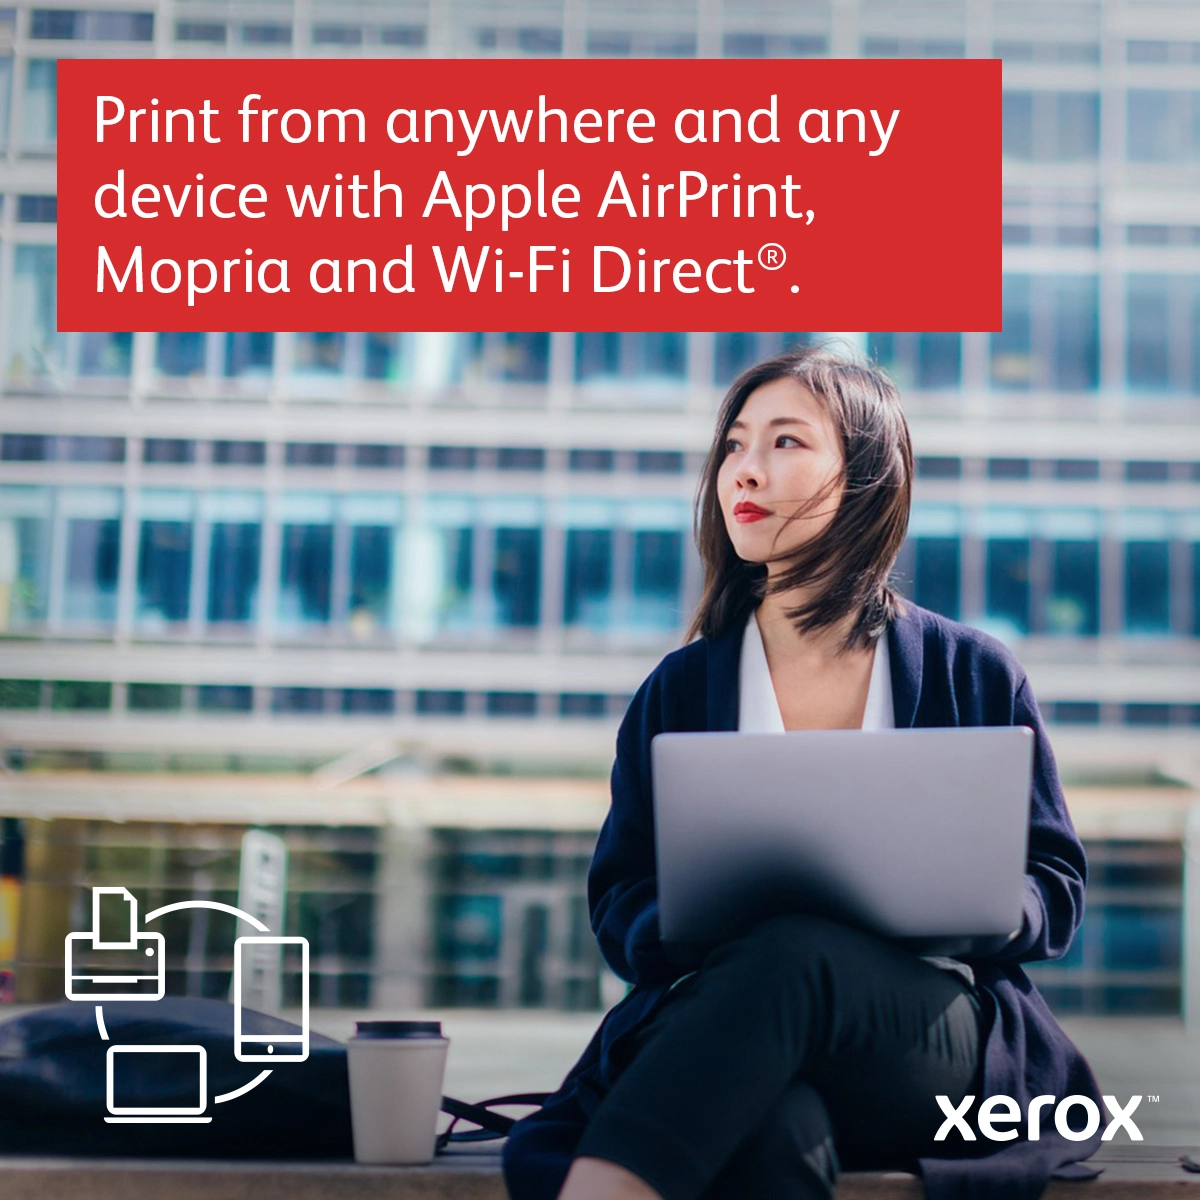 Xerox C230 - Drucker - Farbe - Duplex - Laser